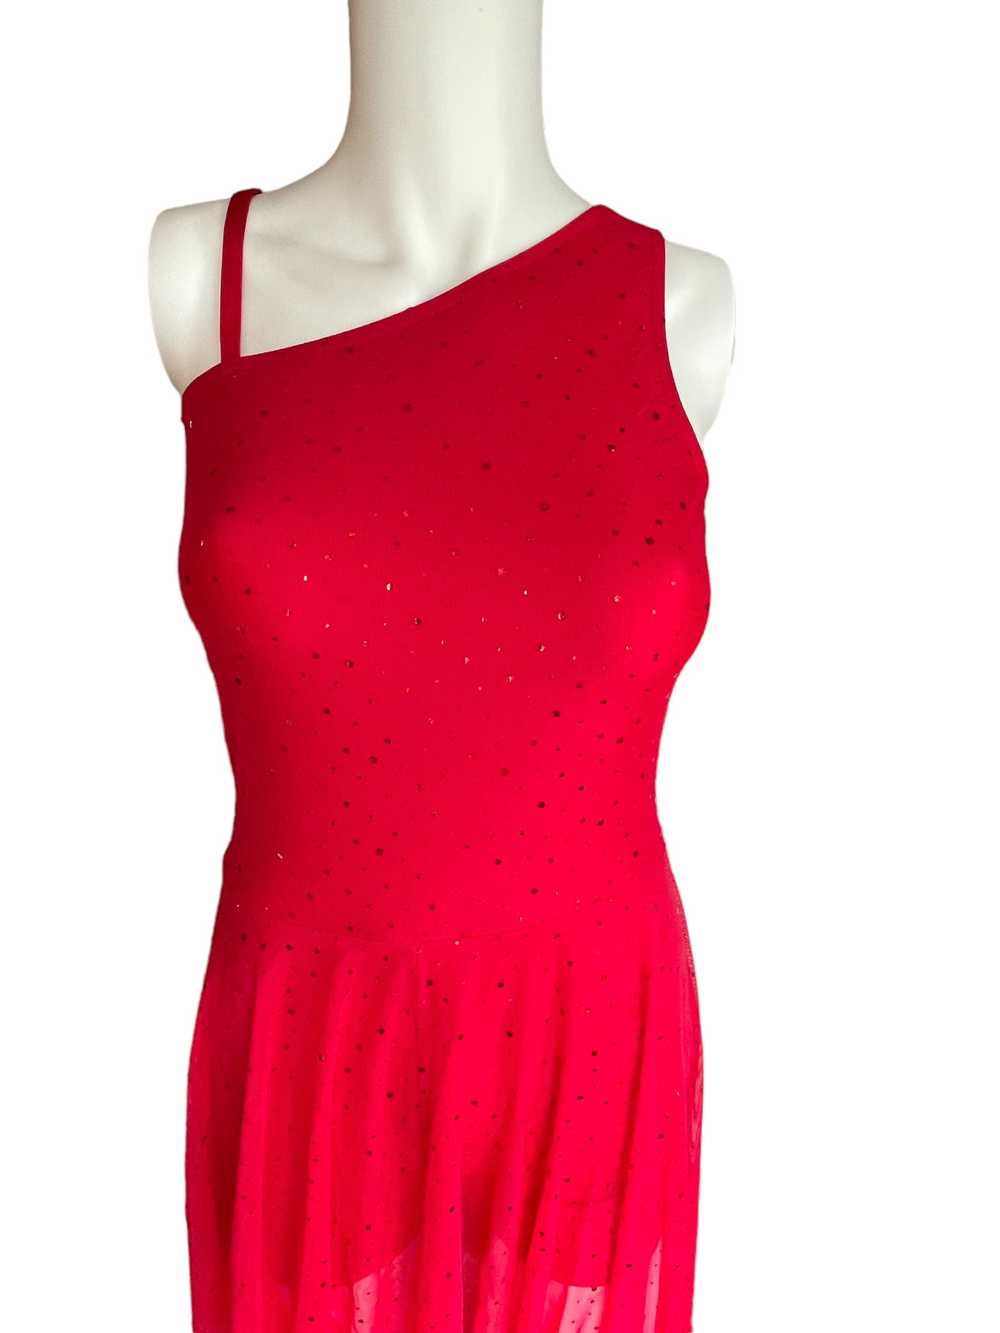 Dance costume - ASYMMETRICAL RED SPARKLE DRESS - image 3